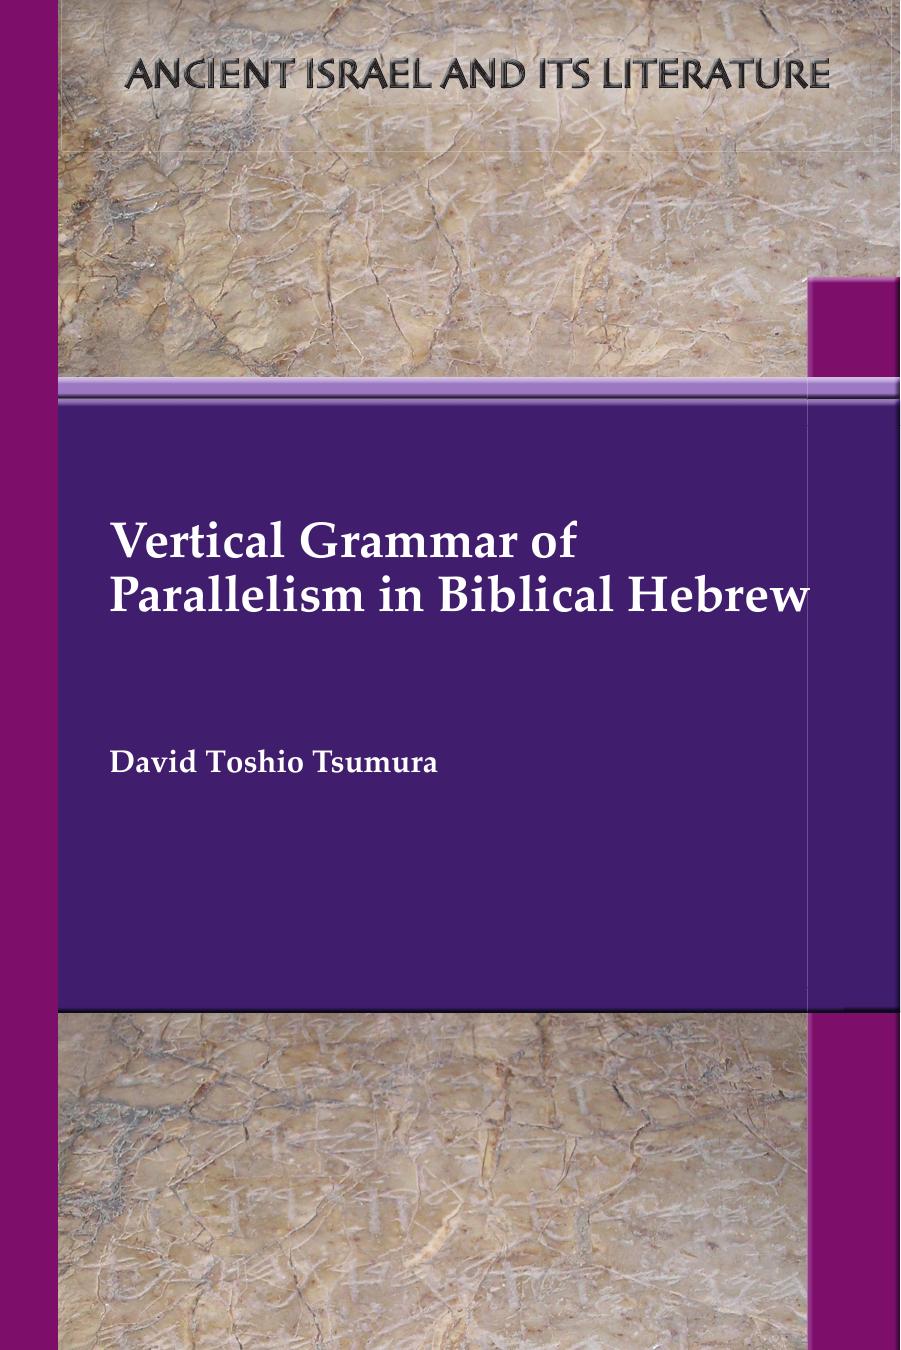 Vertical Grammar of Parallelism in Biblical Hebrew by David Toshio Tsumura